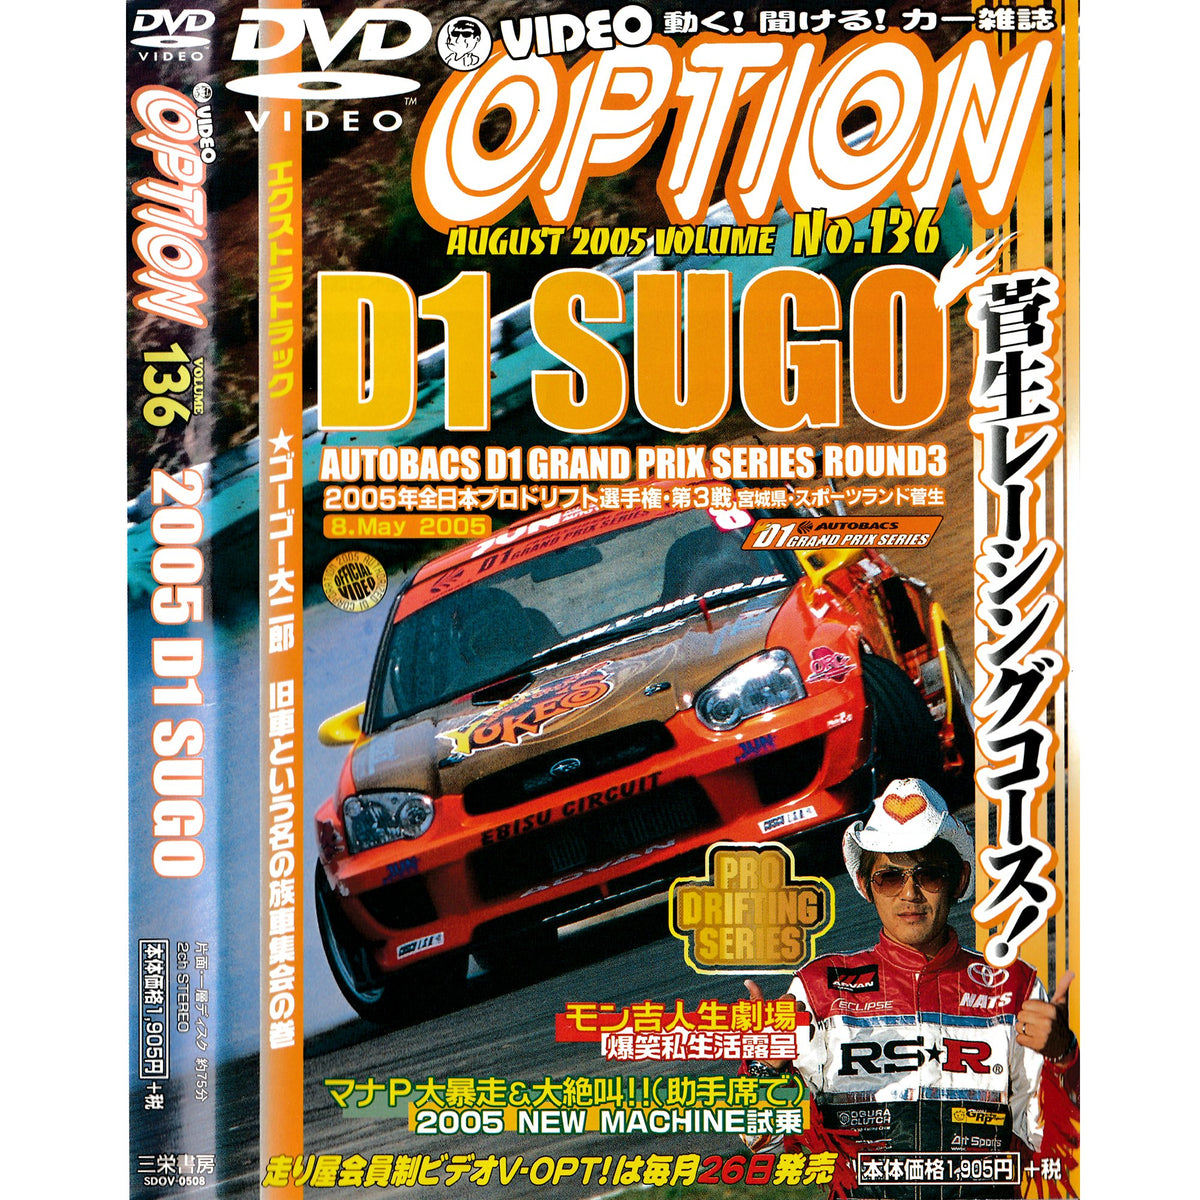 Japan Option DVD D1GP D1 Grand Prix Series Sugo Round 3 2005 #136 - Sugoi JDM